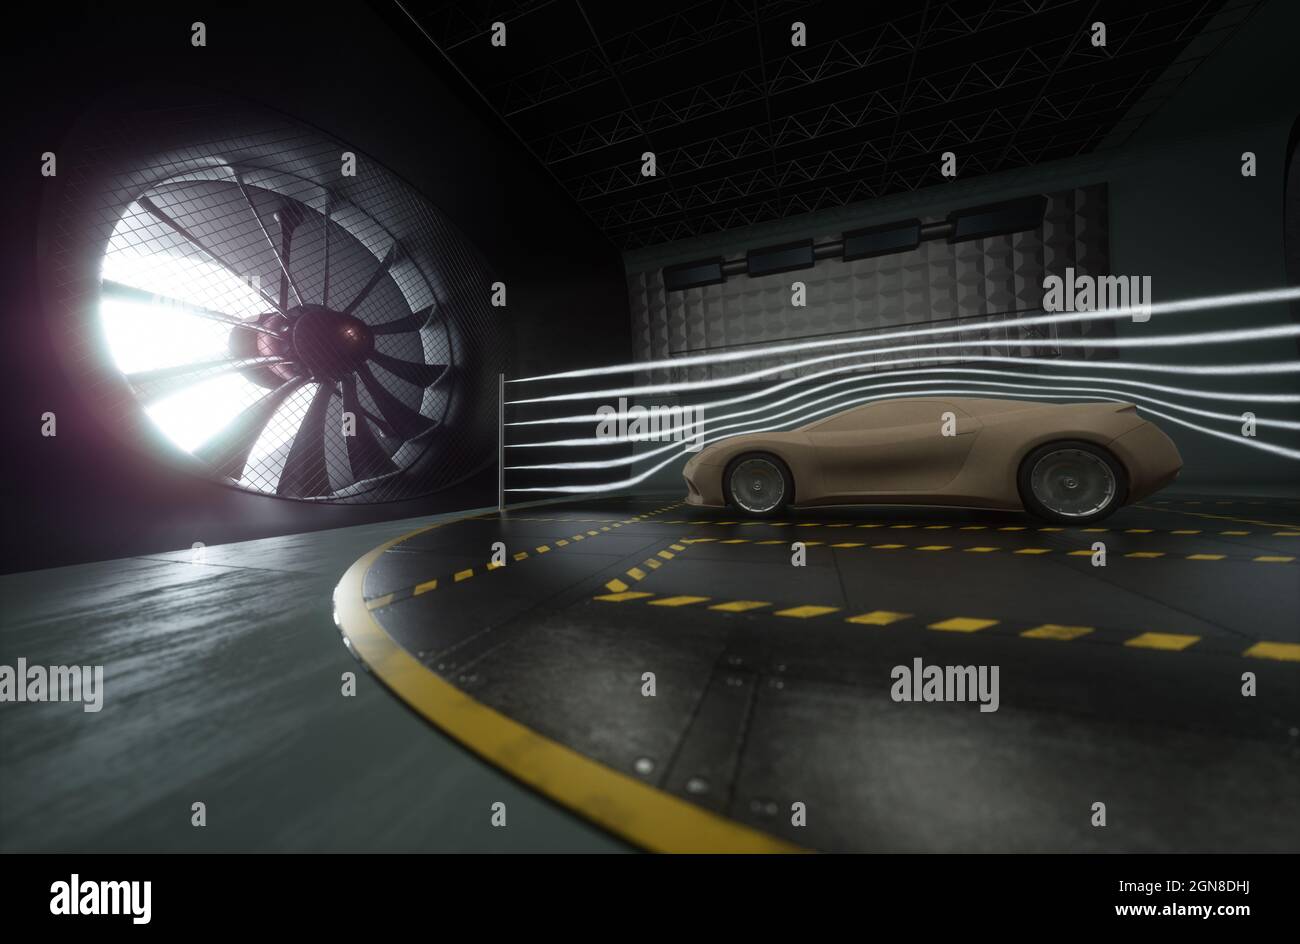 3D illustration of imaginary sports car. Conceptual prototype inside aerodynamic tunnel. Stock Photo